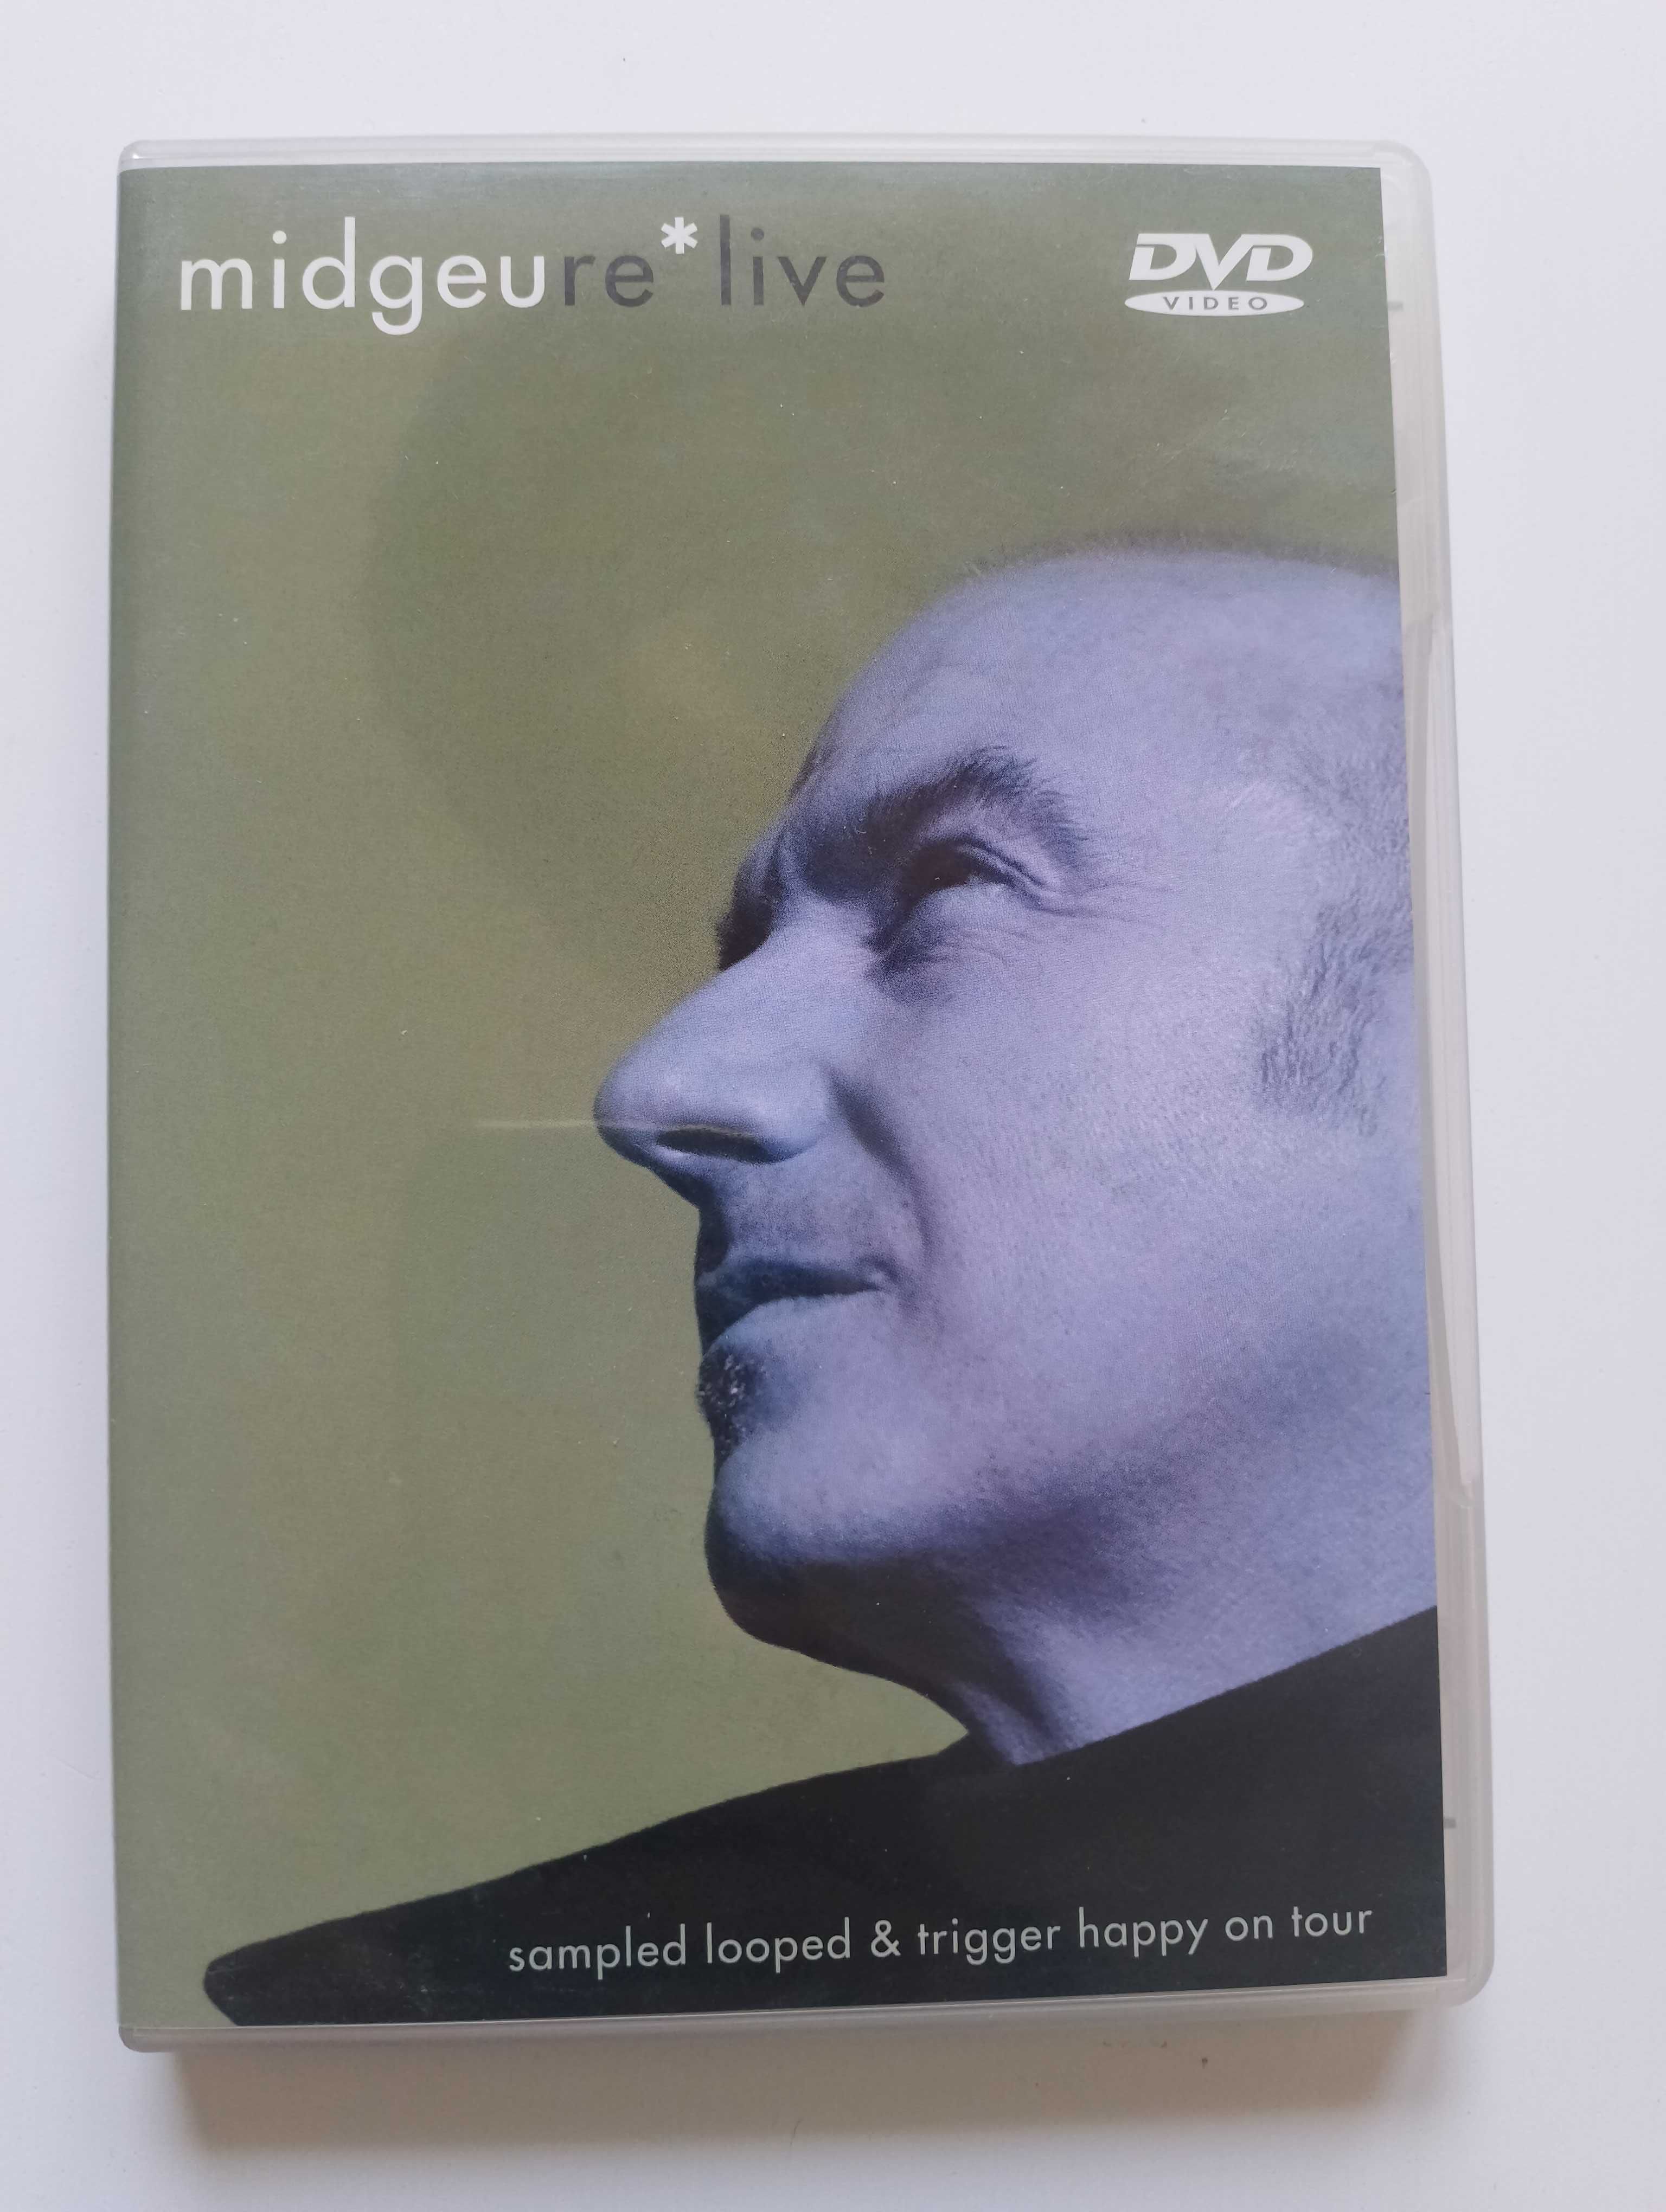 Midge Ure - Live Sampled Looped & Trigger Ultravox DVD